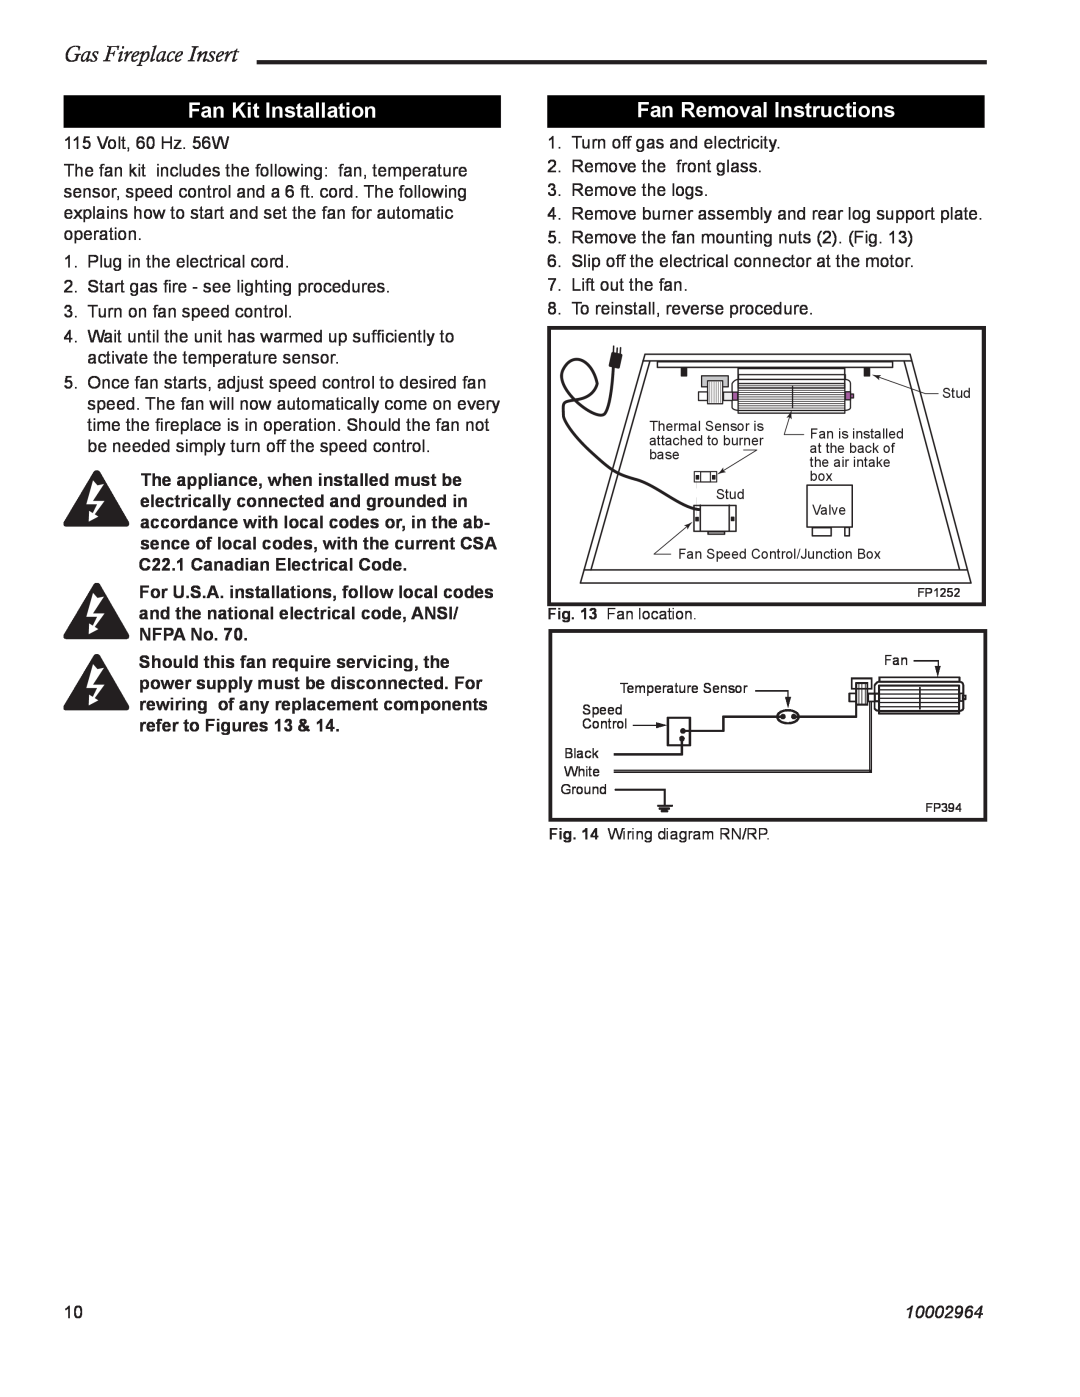 CFM Corporation A125, A132 manual Fan Kit Installation, Fan Removal Instructions, Gas Fireplace Insert, 10002964 